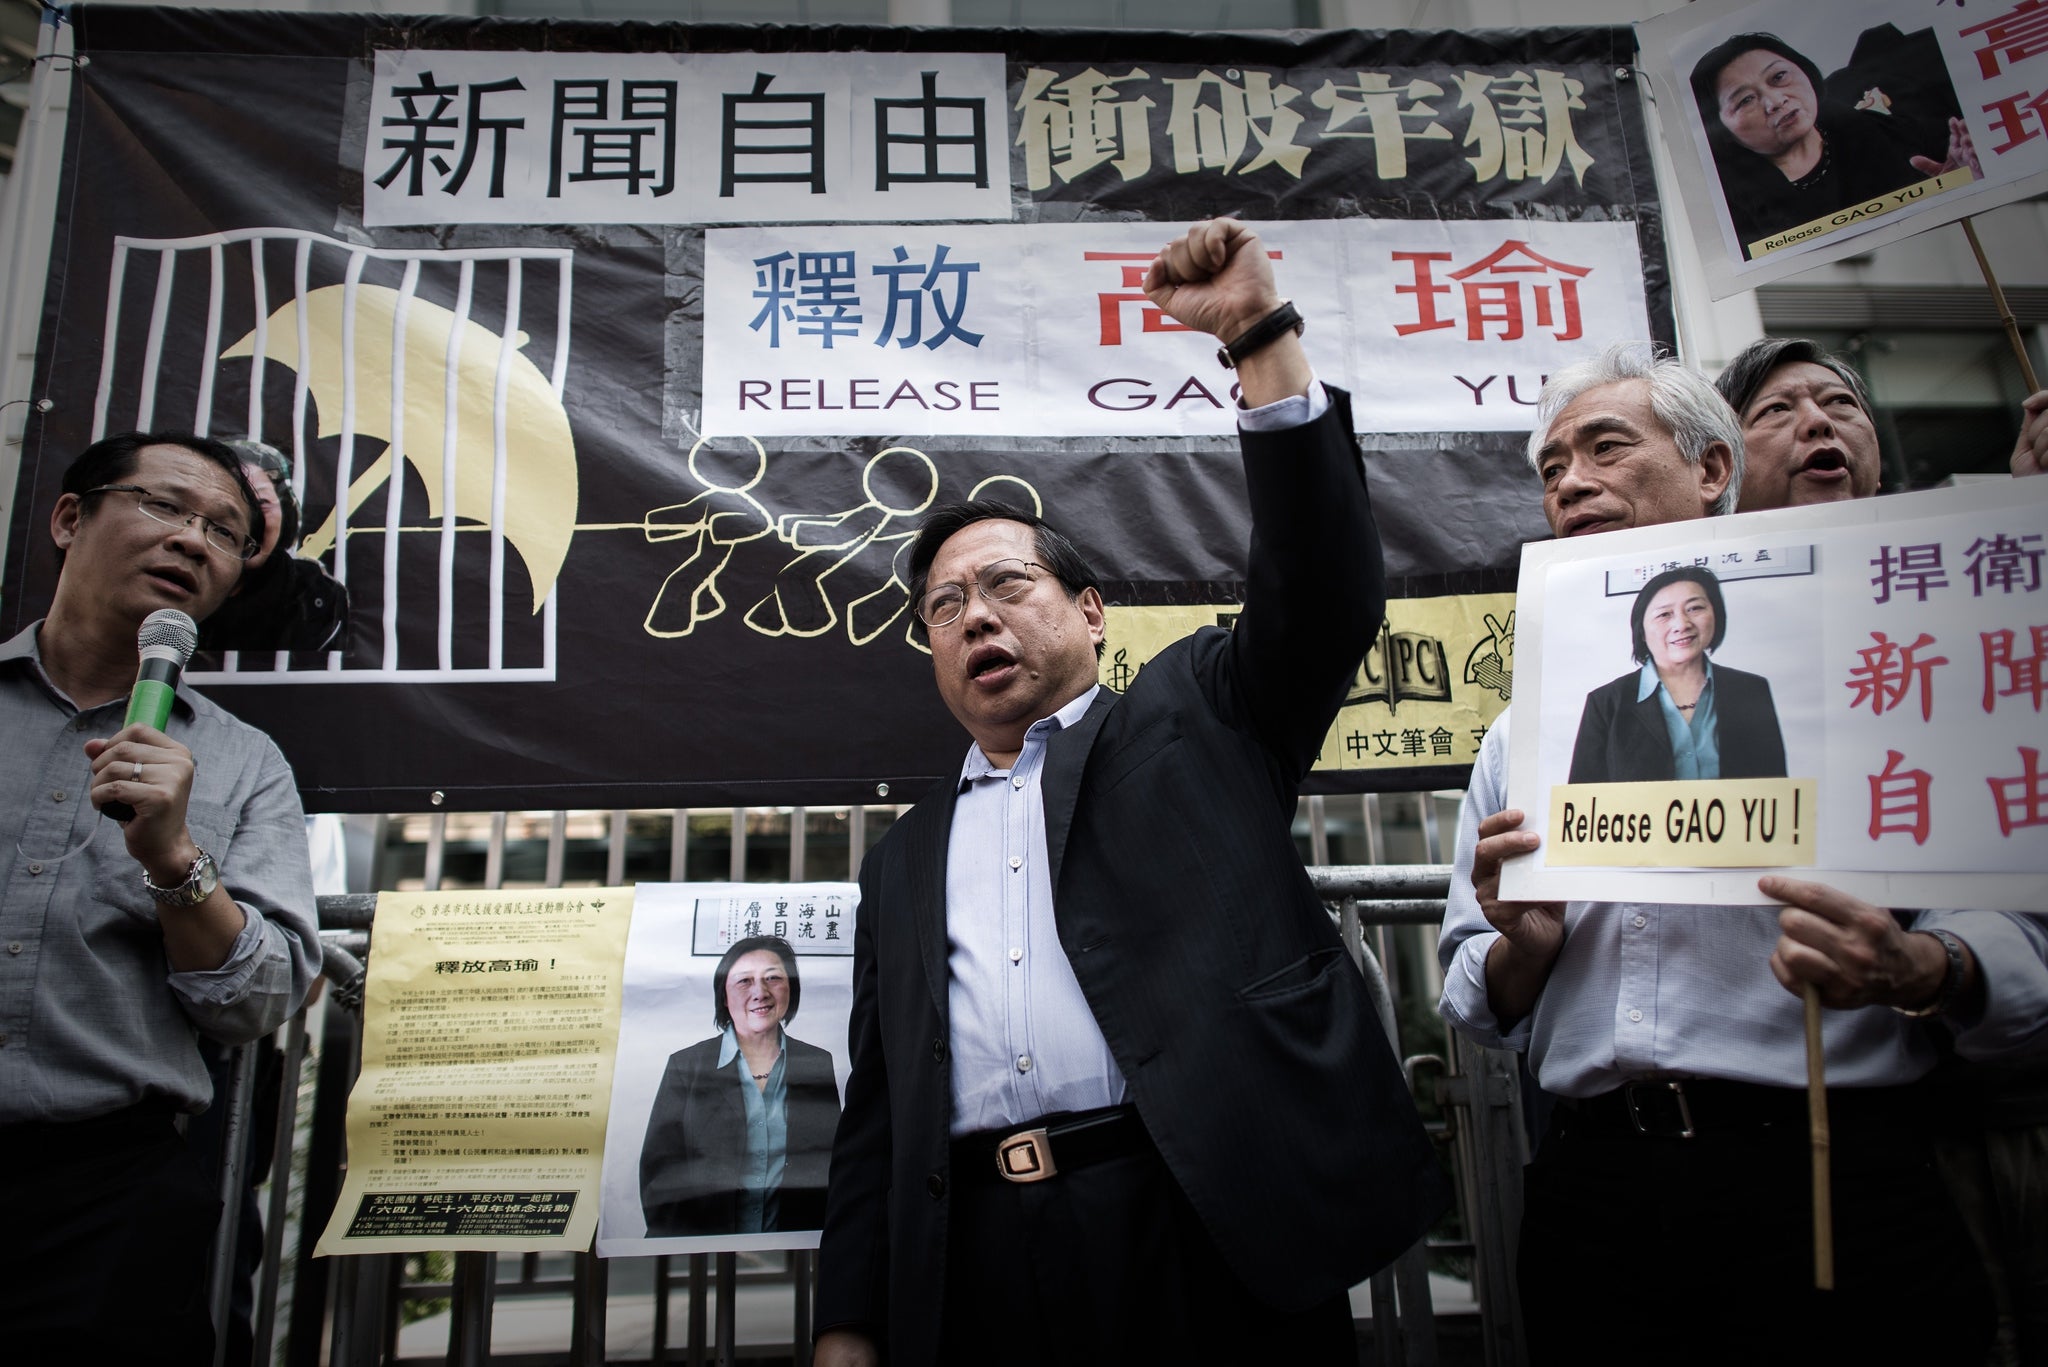 Albert Ho, of the Hong Kong democratic party, shouts slogans today outside Hong Kong's China liason office in support of Gao Yu and press freedom